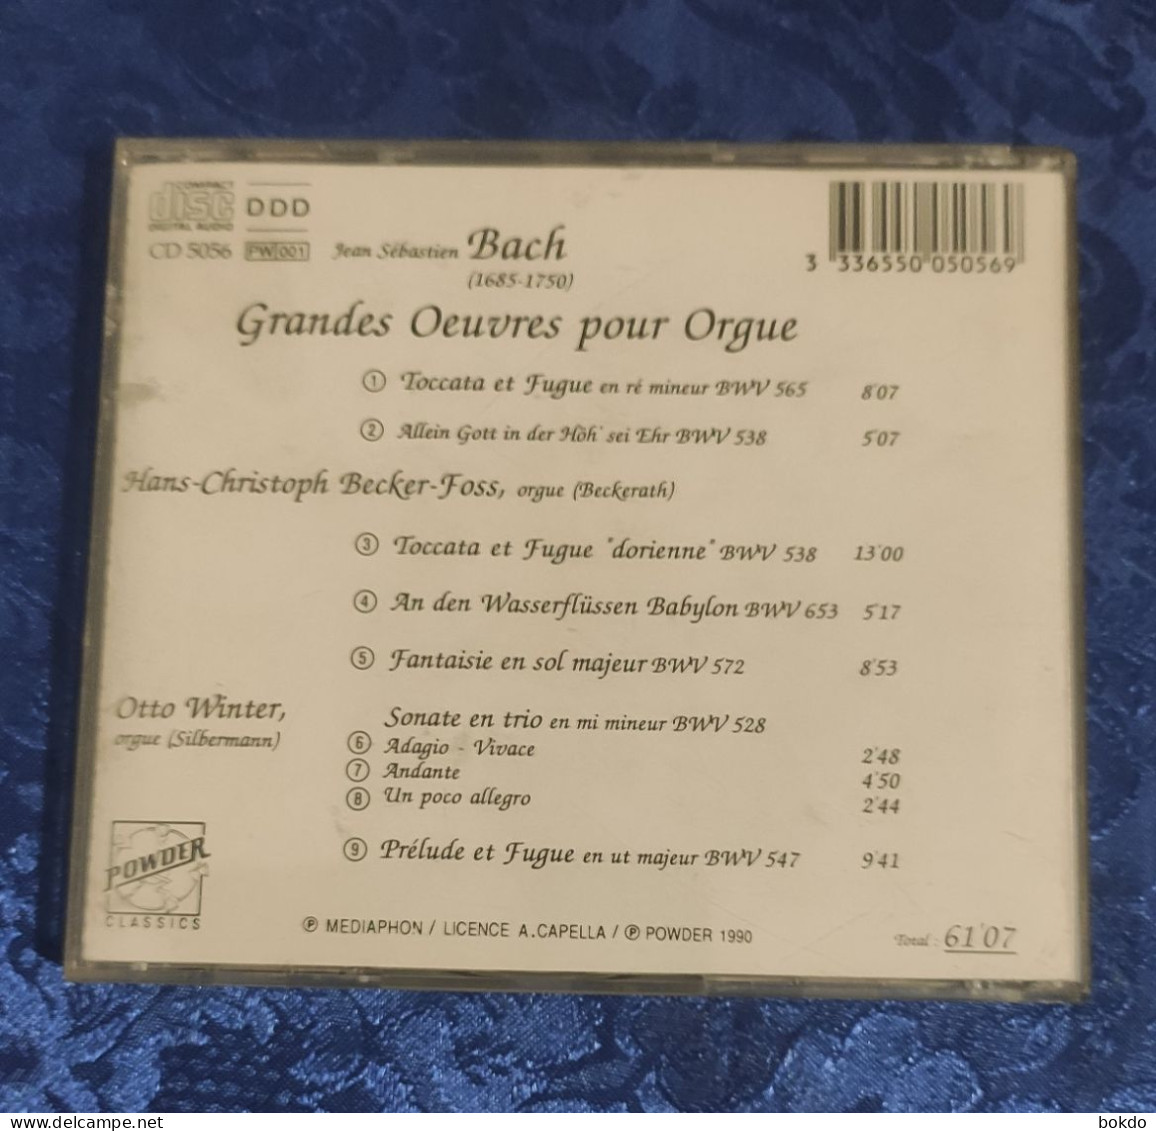 J.S BACH - Grandes Oeuvres Pour Orgue - Classical